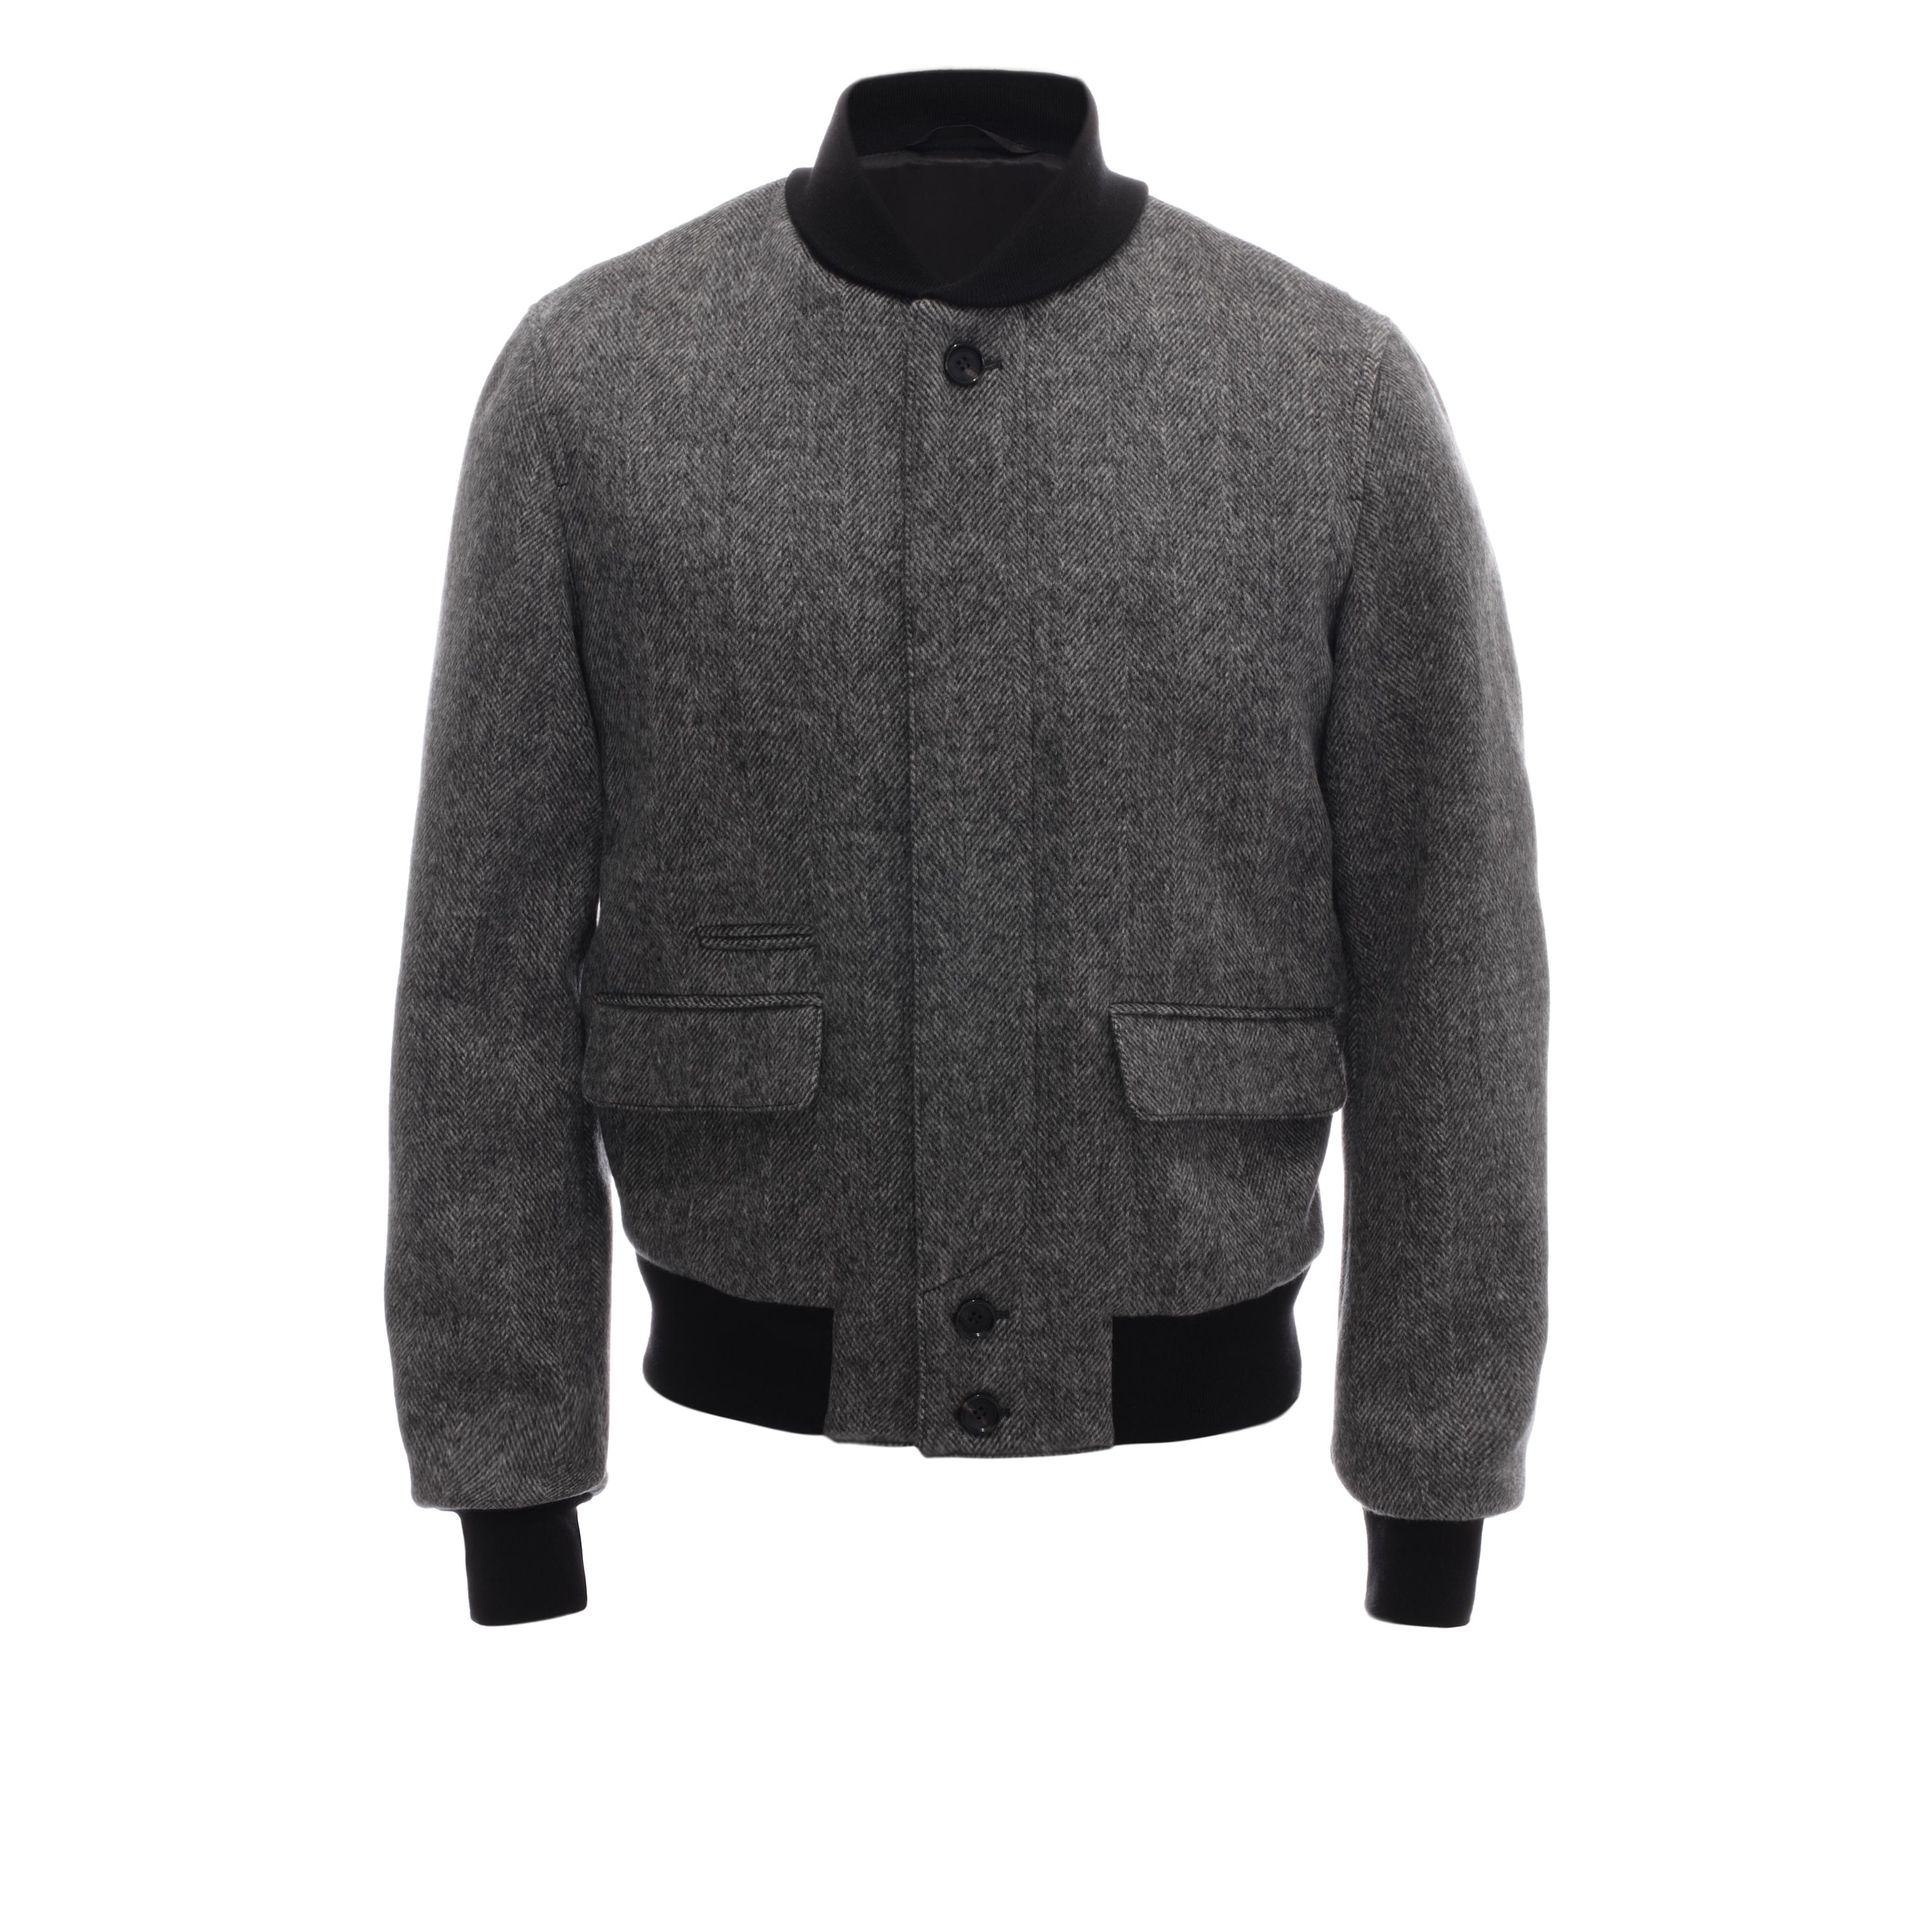 Lyst - Alexander Mcqueen Wool Cashmere Blouson Jacket in Black for Men